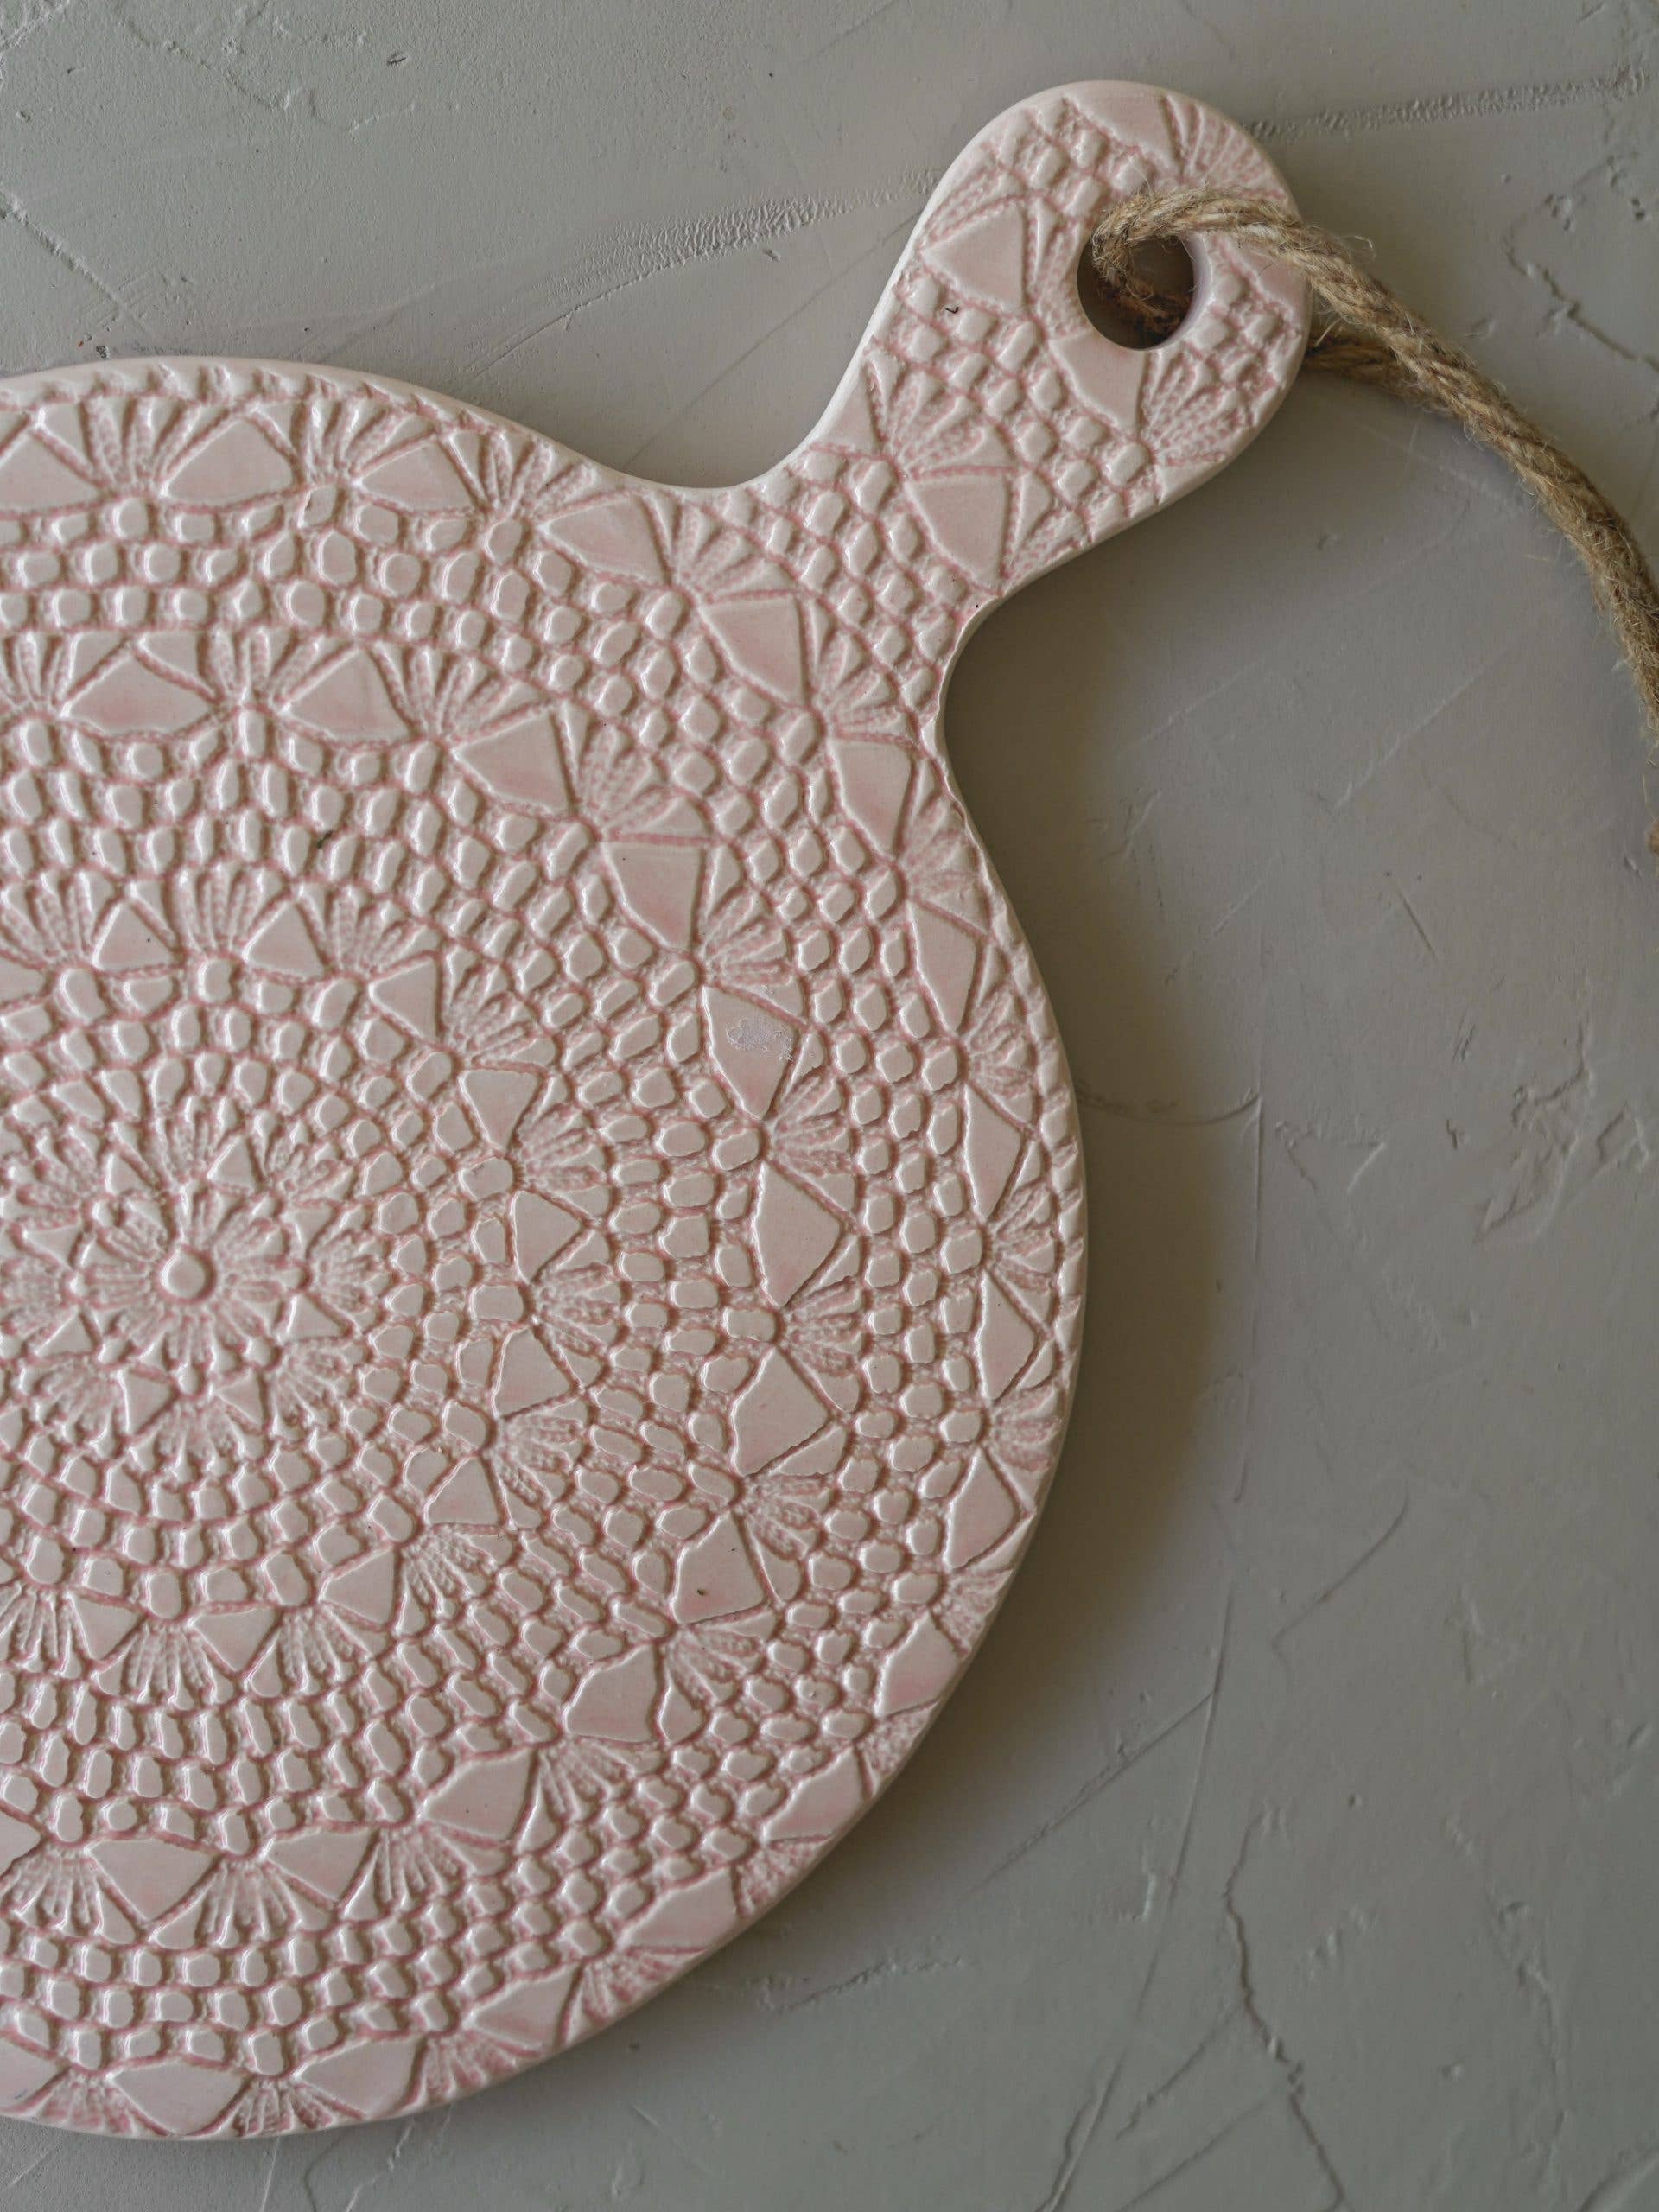 LIght pink ceramic crochet board with 